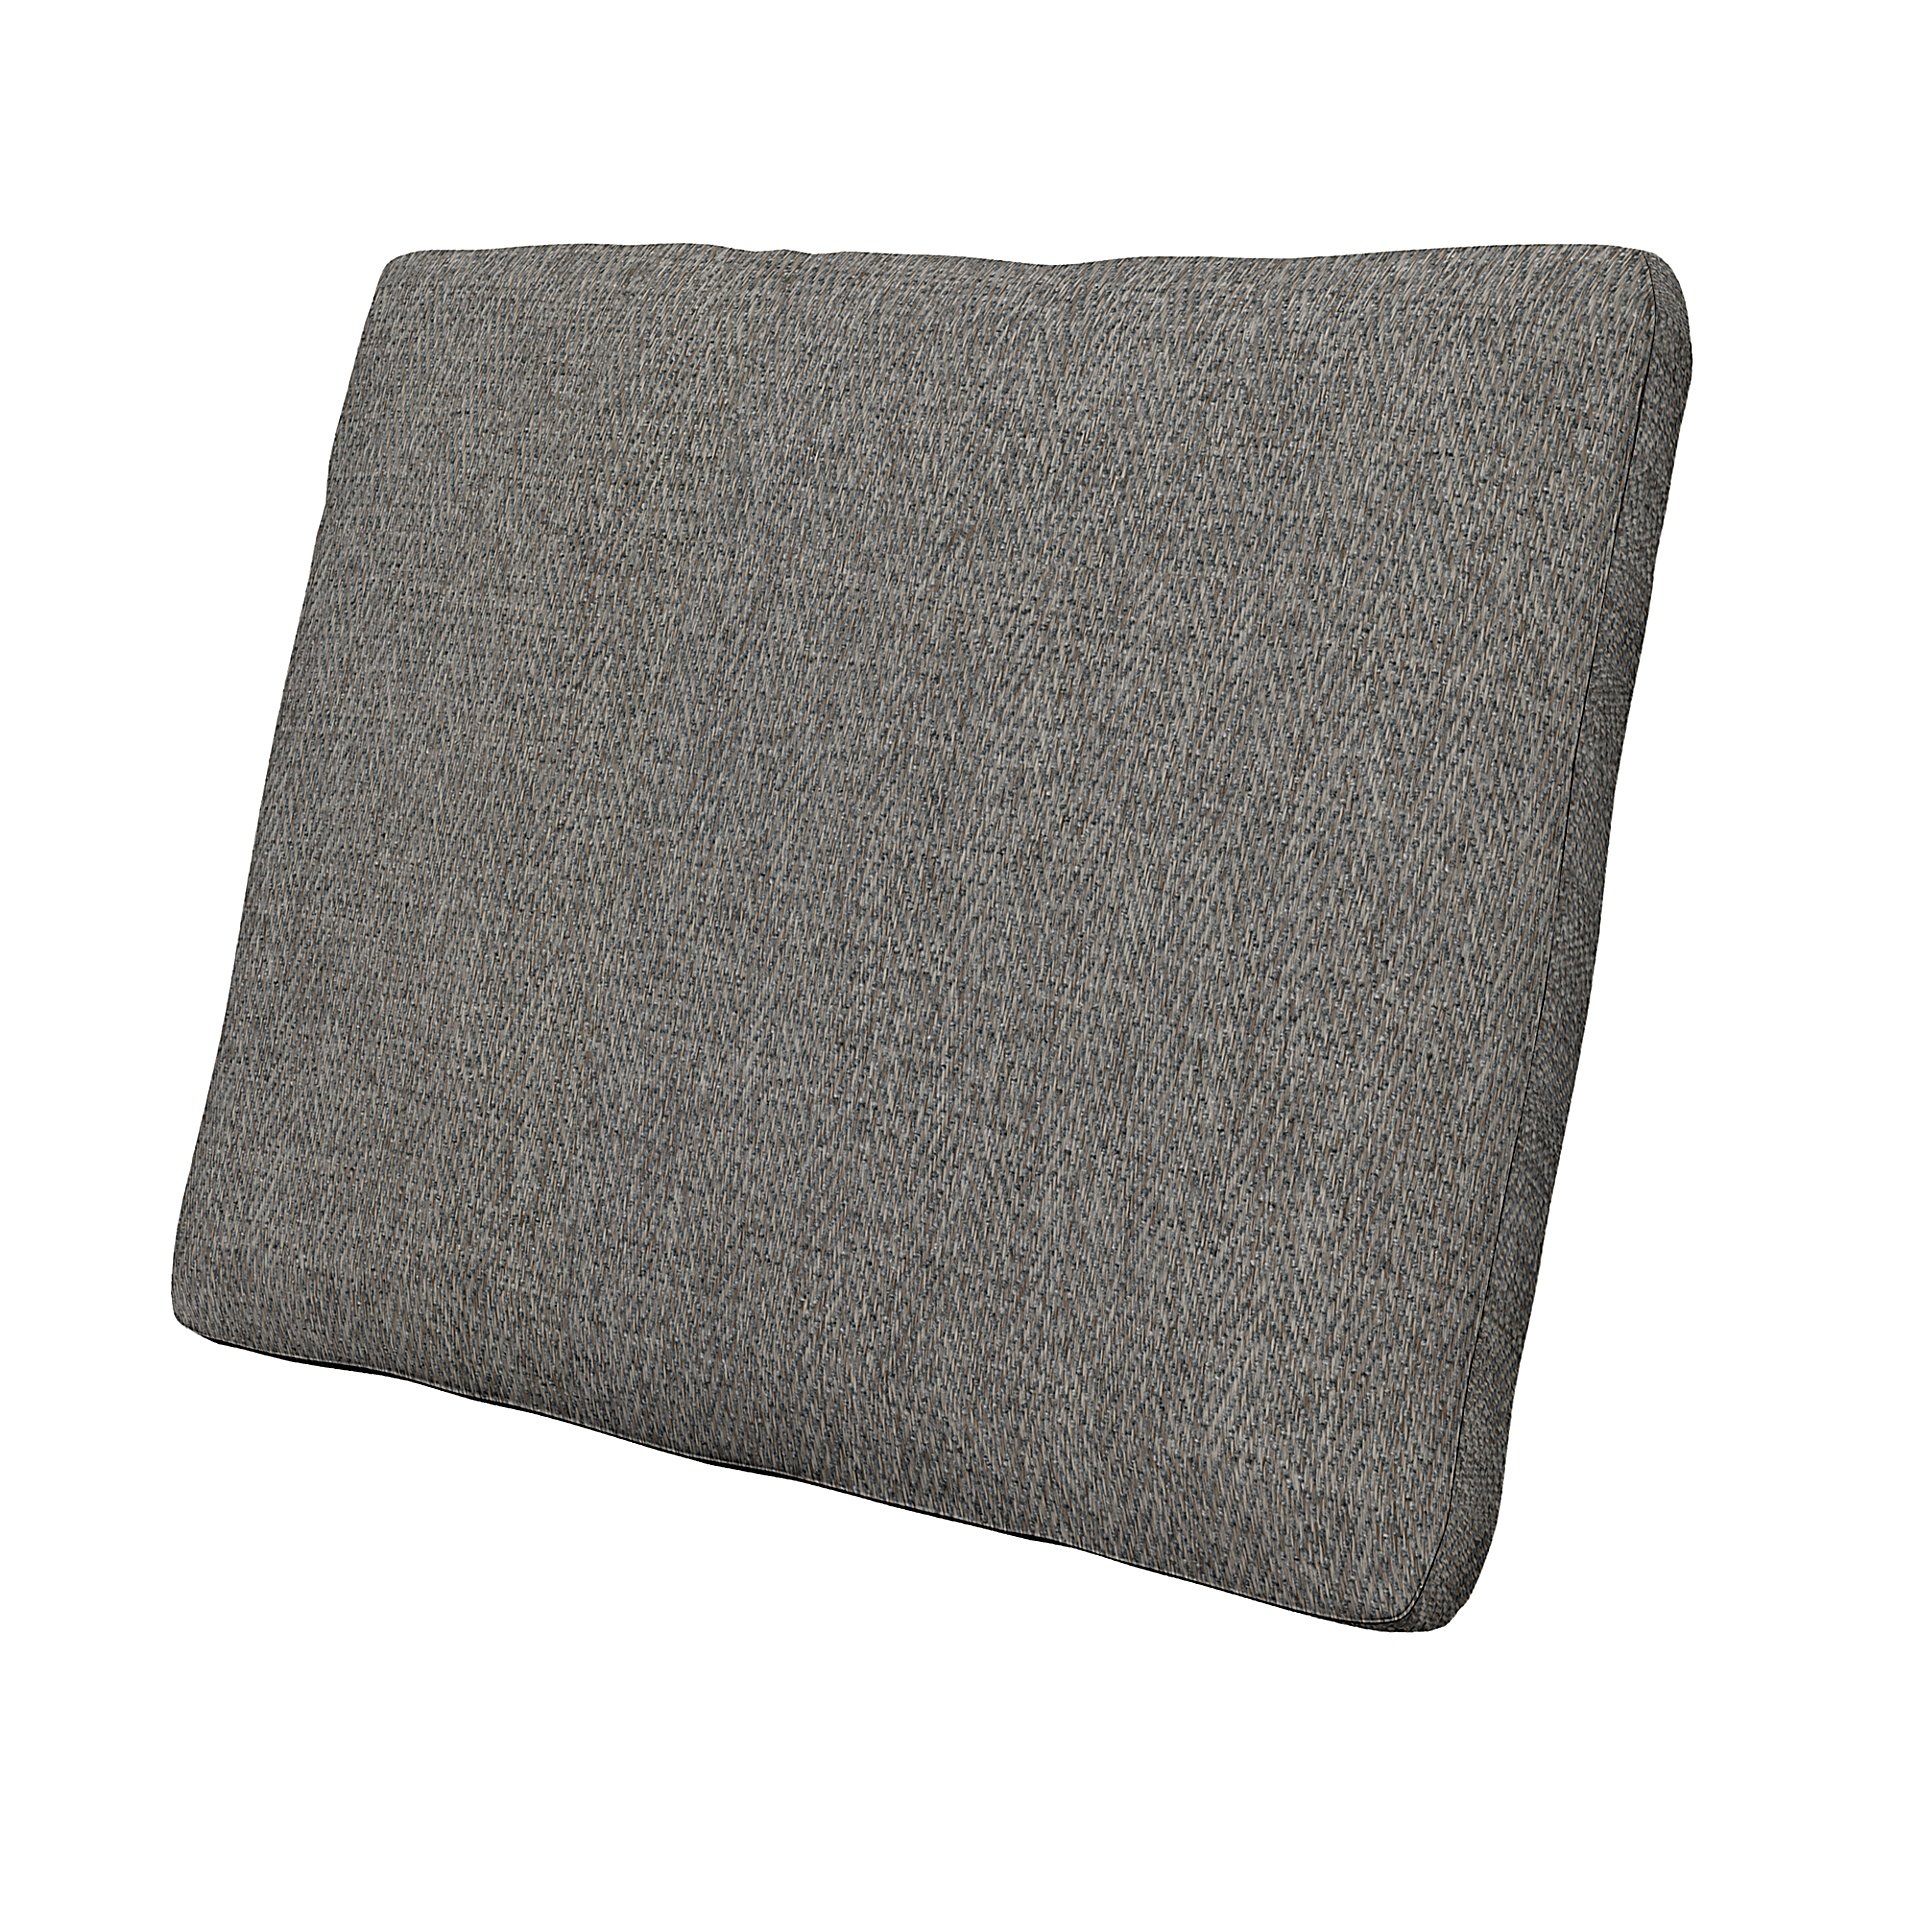 IKEA - Cushion Cover Karlstad 58x48x5 cm, Taupe, Boucle & Texture - Bemz